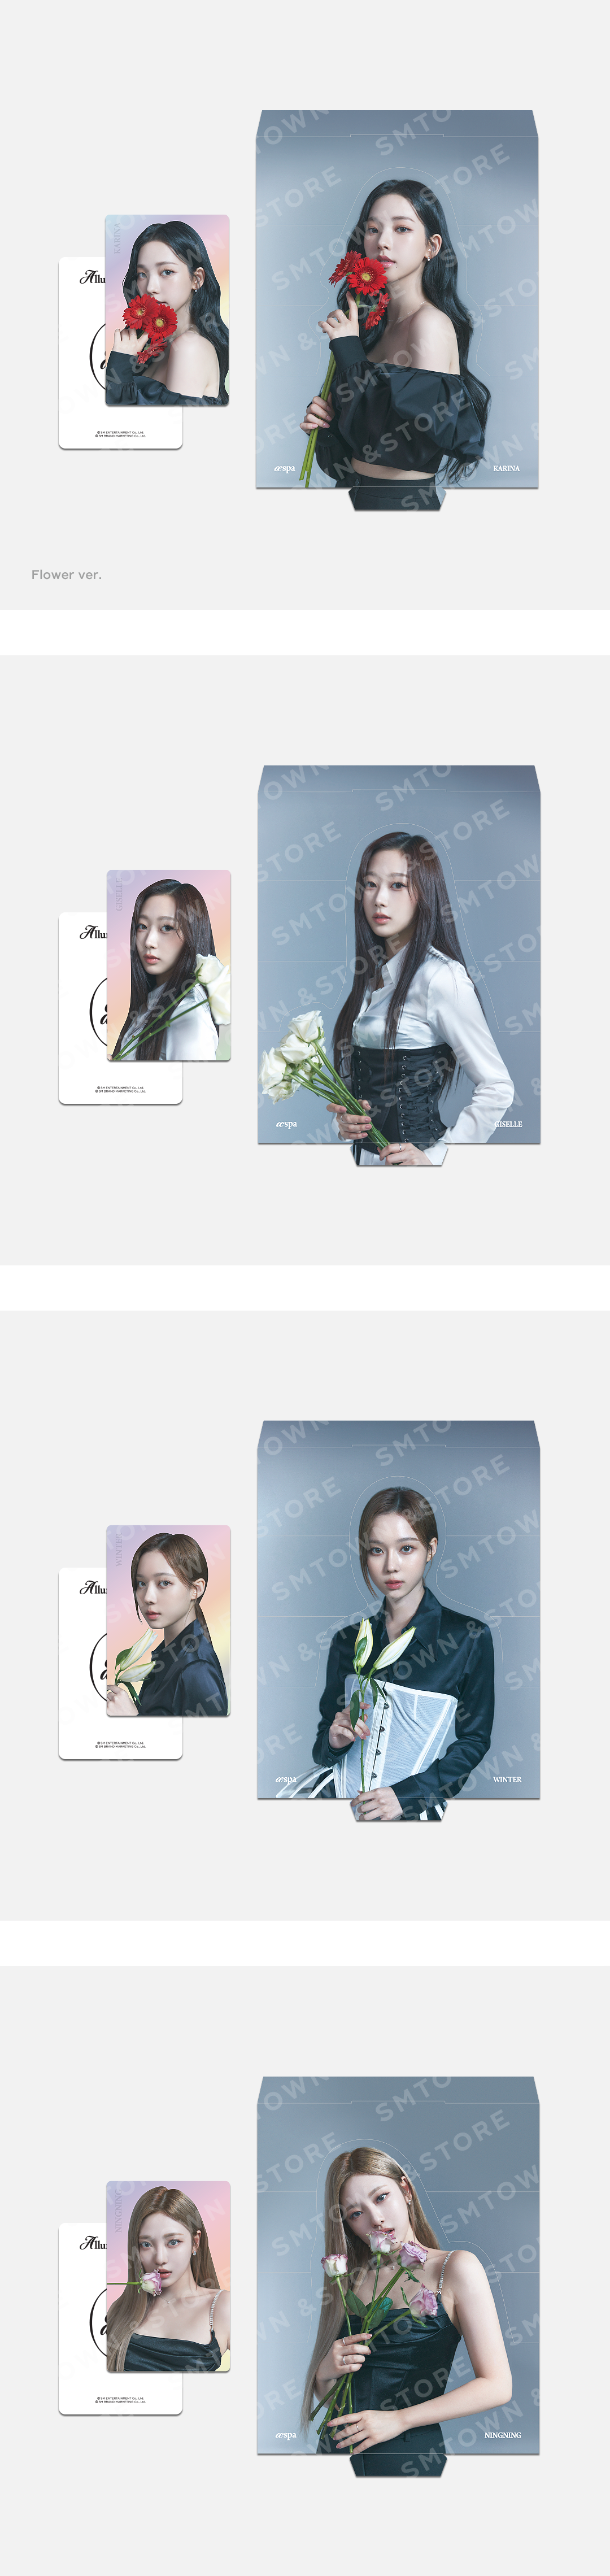 aespa - Alluring Atelier Merchandise - HOLOGRAM PHOTO CARD SET flower version